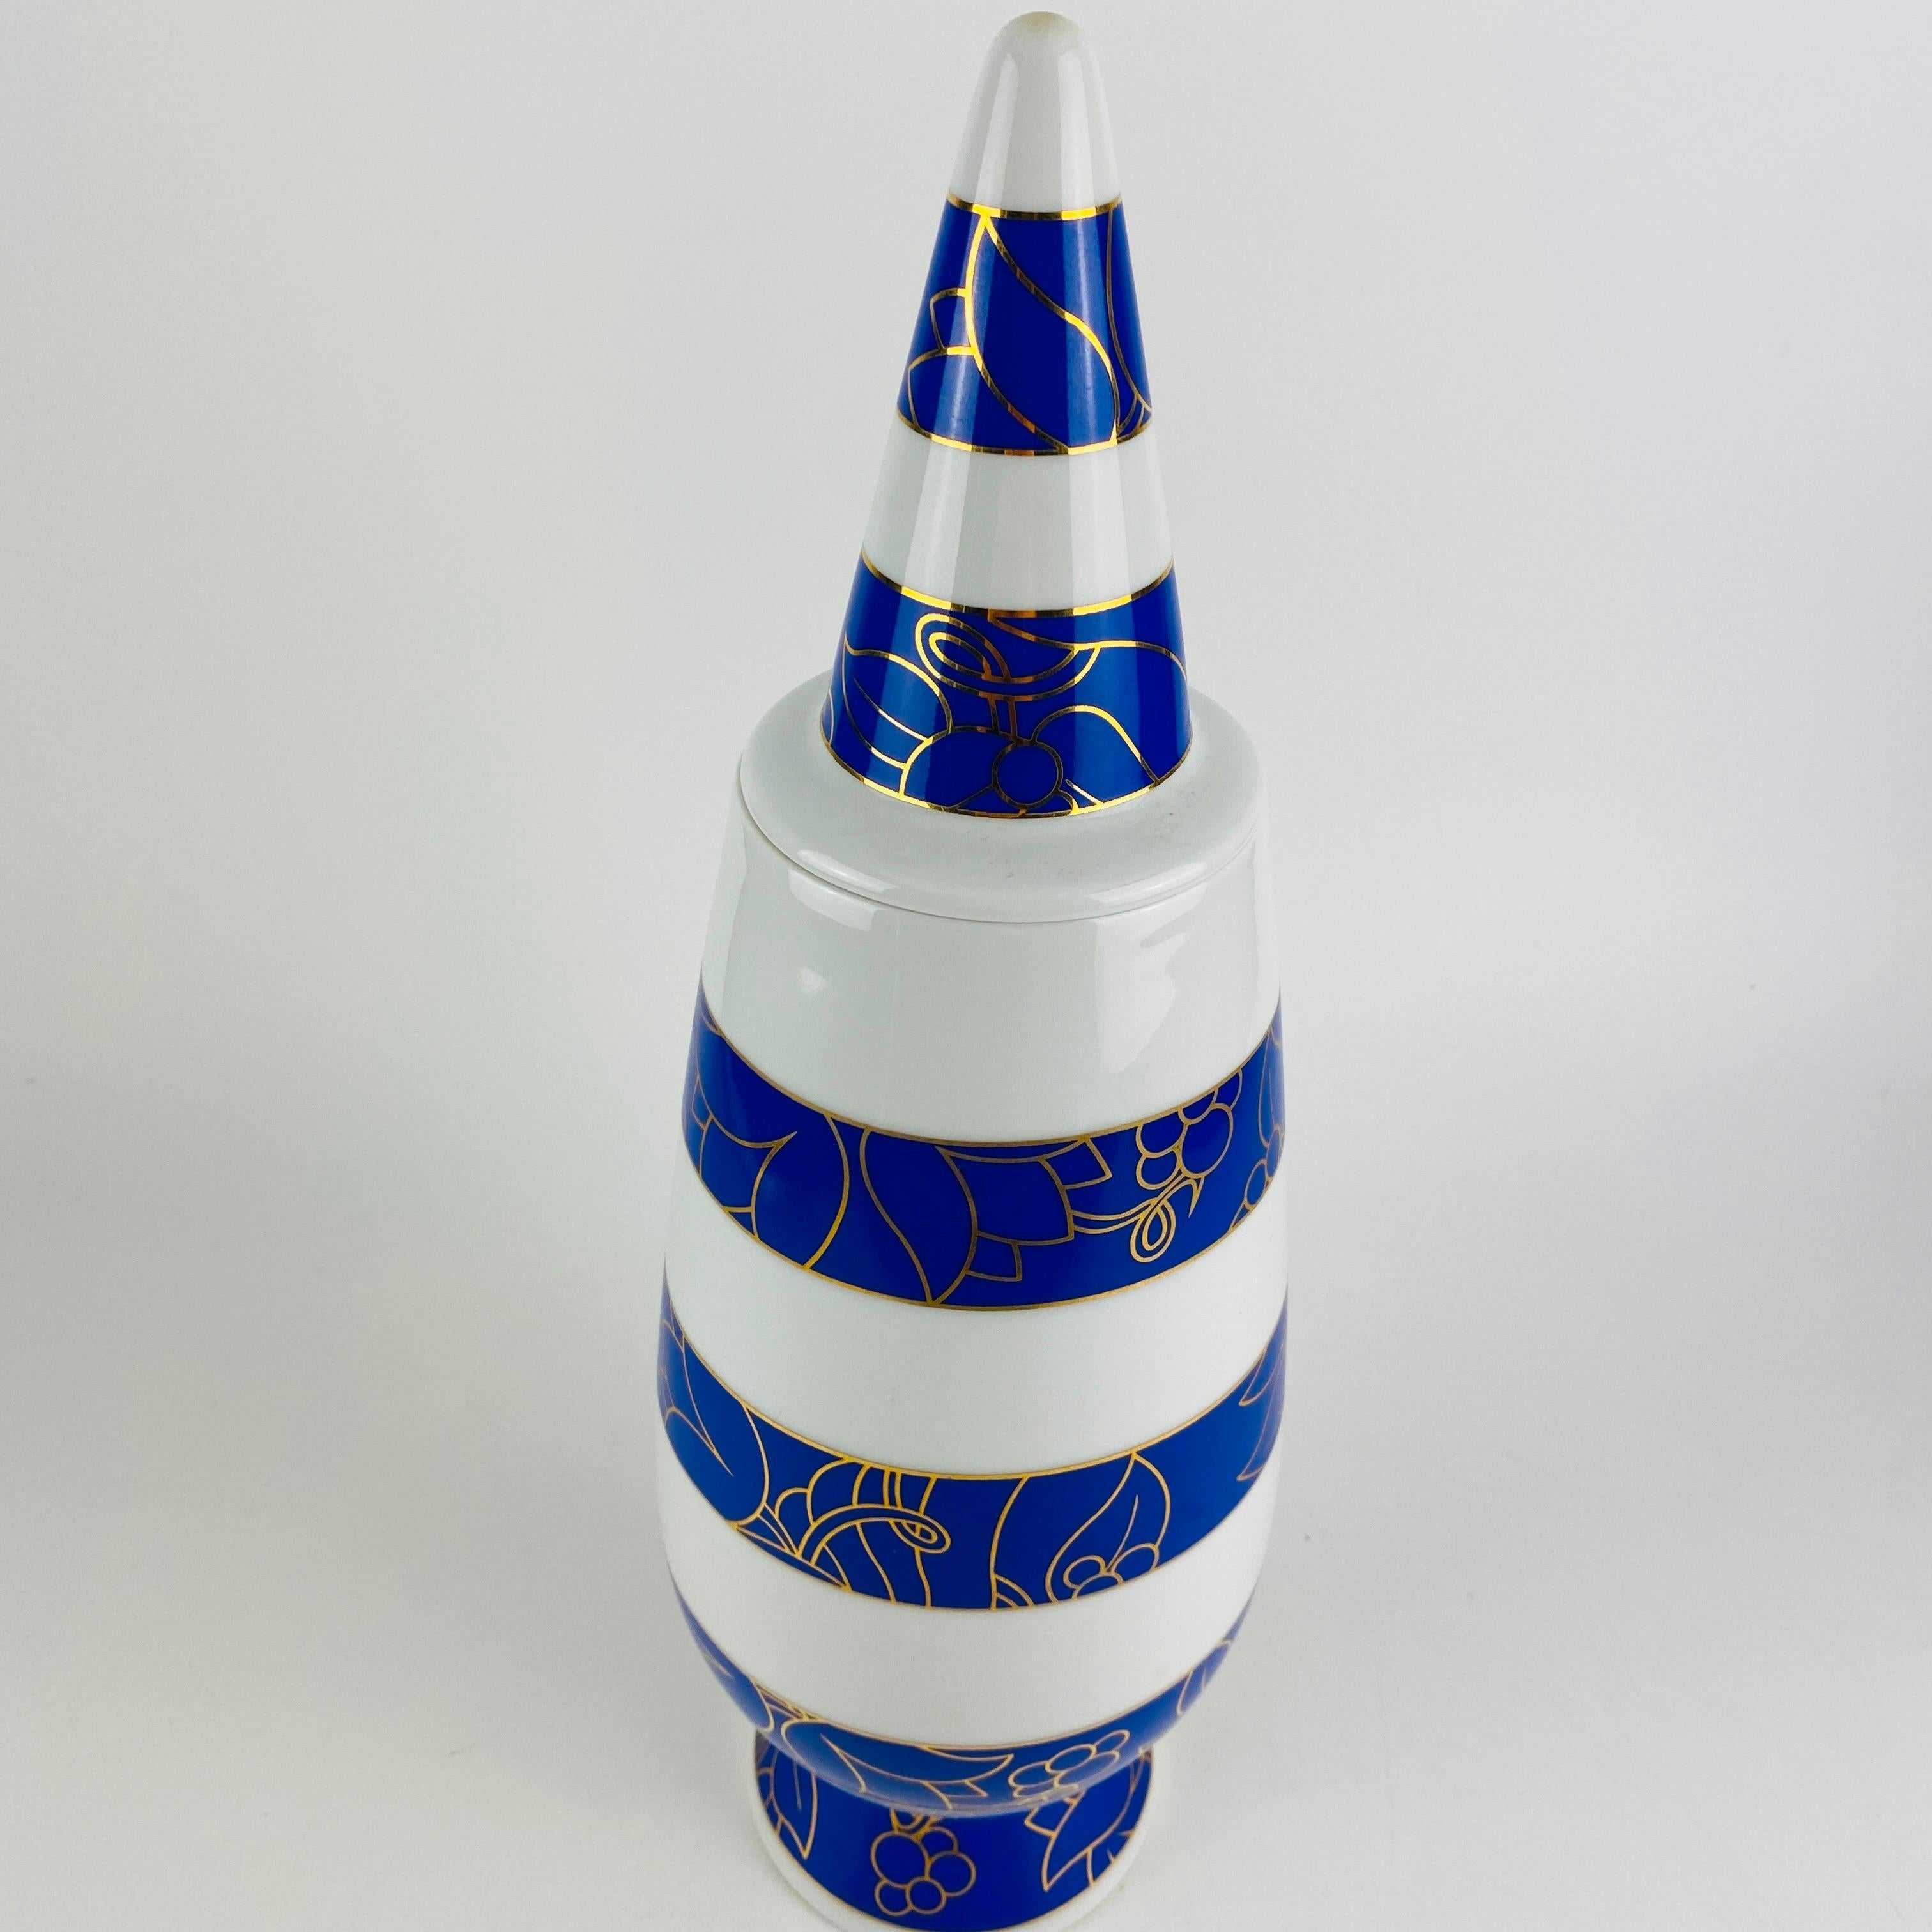 Italian Alessi Tendentse Vase by Michael Graves for Alessandro Mendini 100% Make-up N32